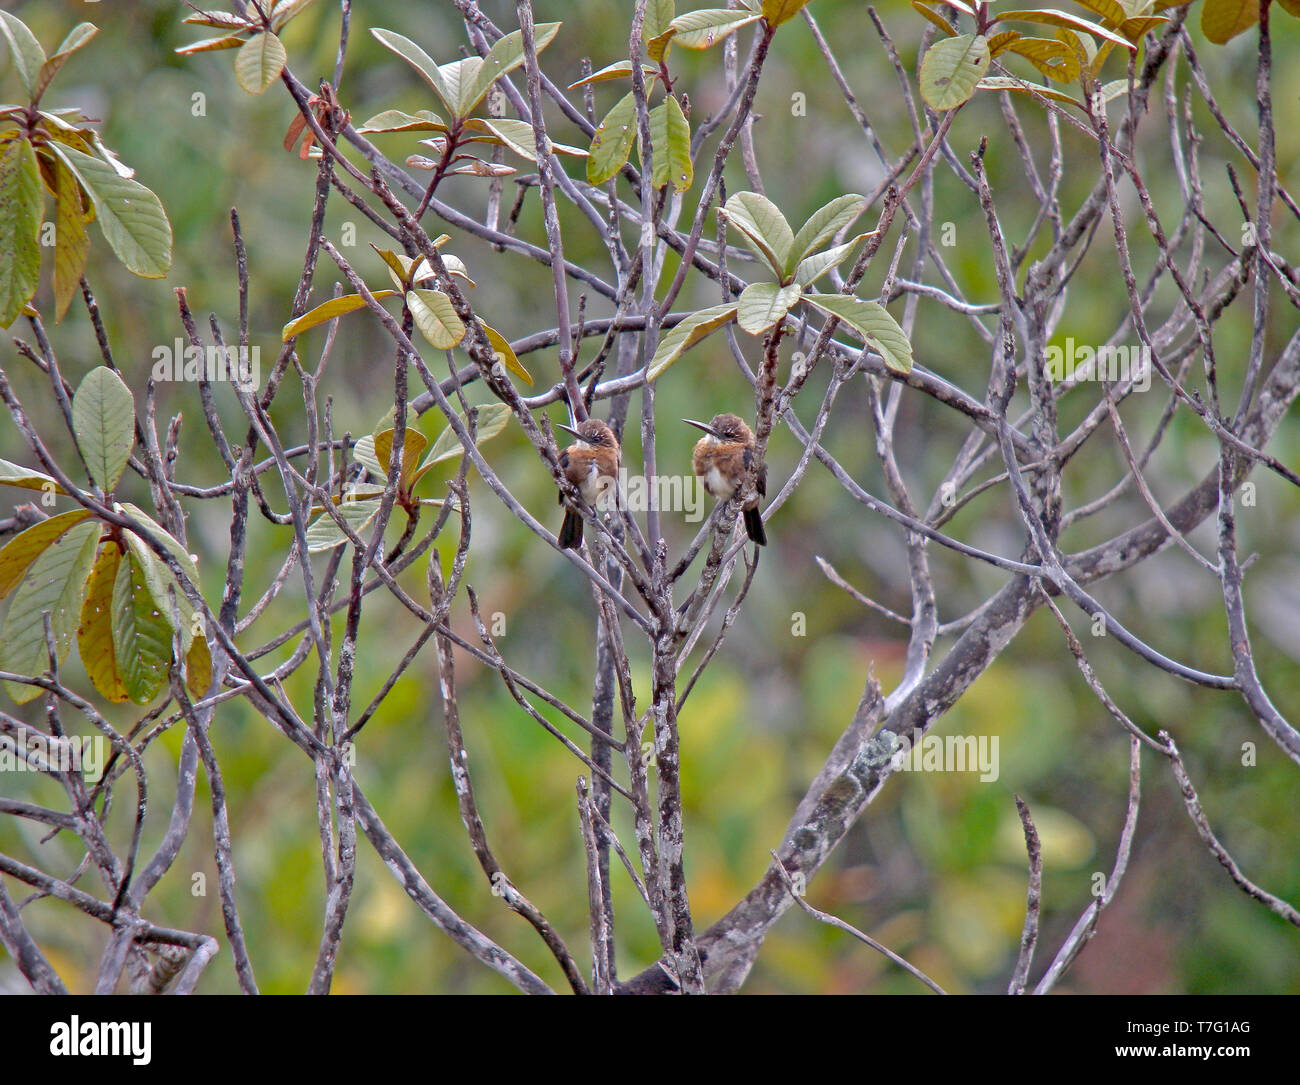 Brown jacamar (Brachygalba lugubris) pair perched in a tree Stock Photo